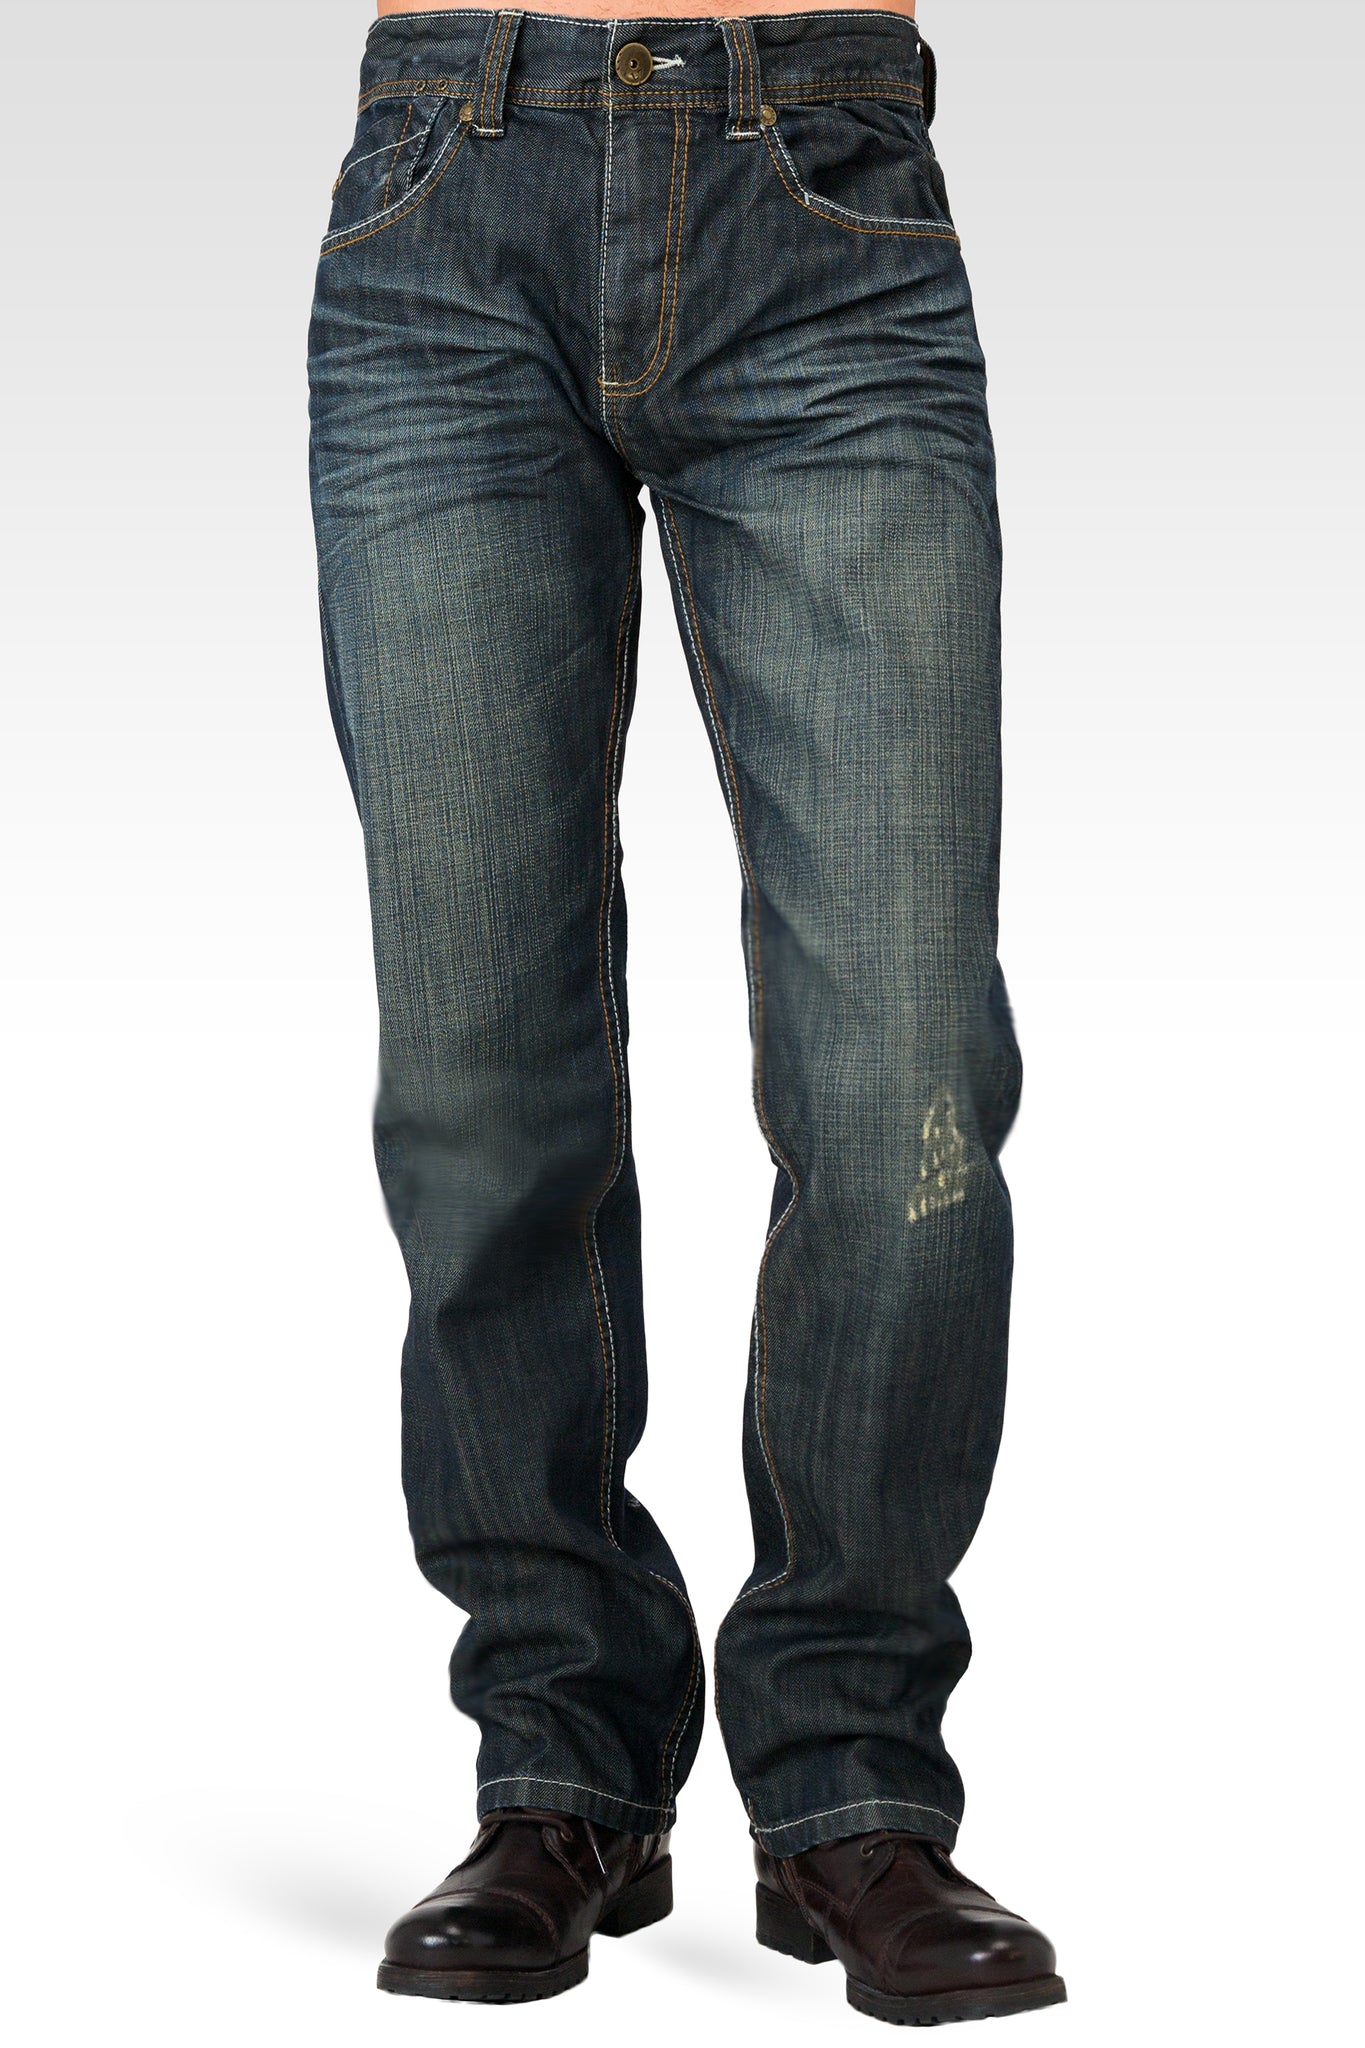 How To Custom Paint Denim Jeans, LV Jeans Tutorial